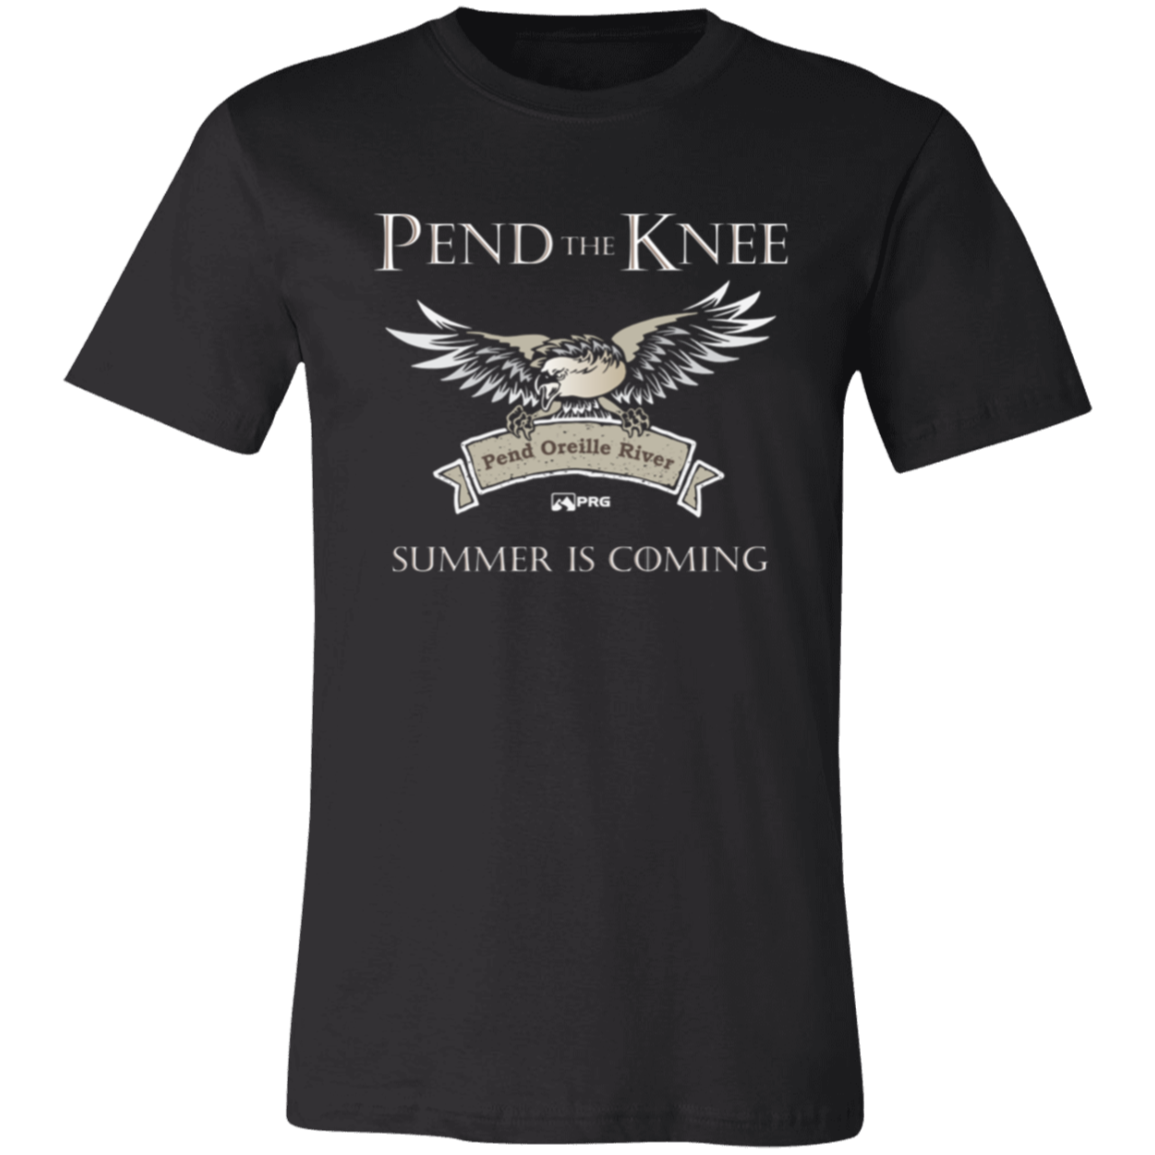 Pend the Knee - Shirt